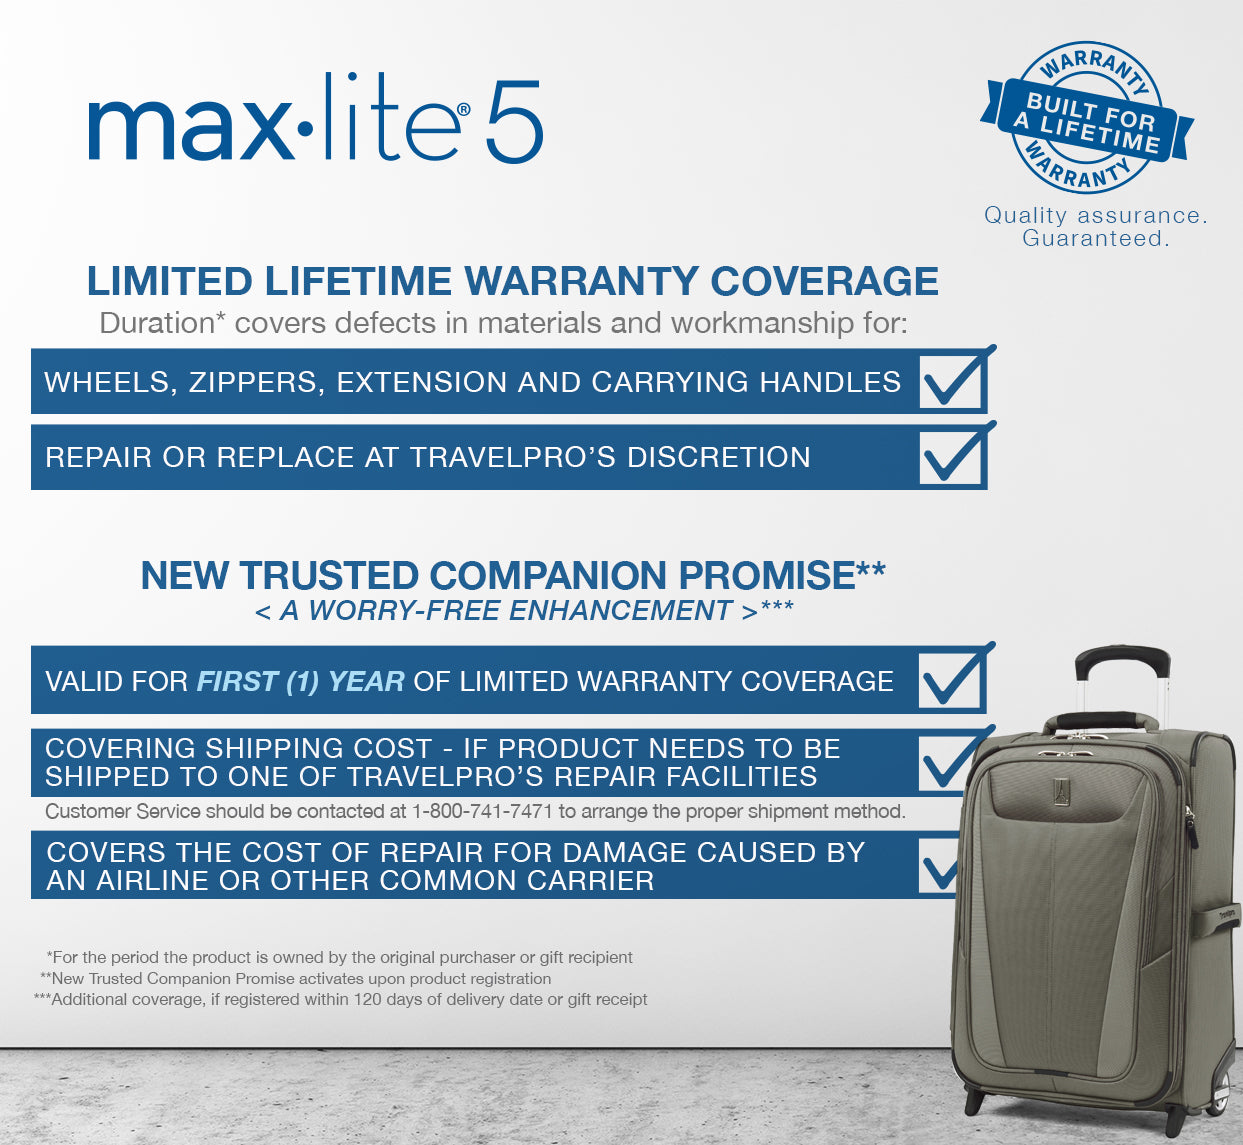 Max lite lifetime warranty